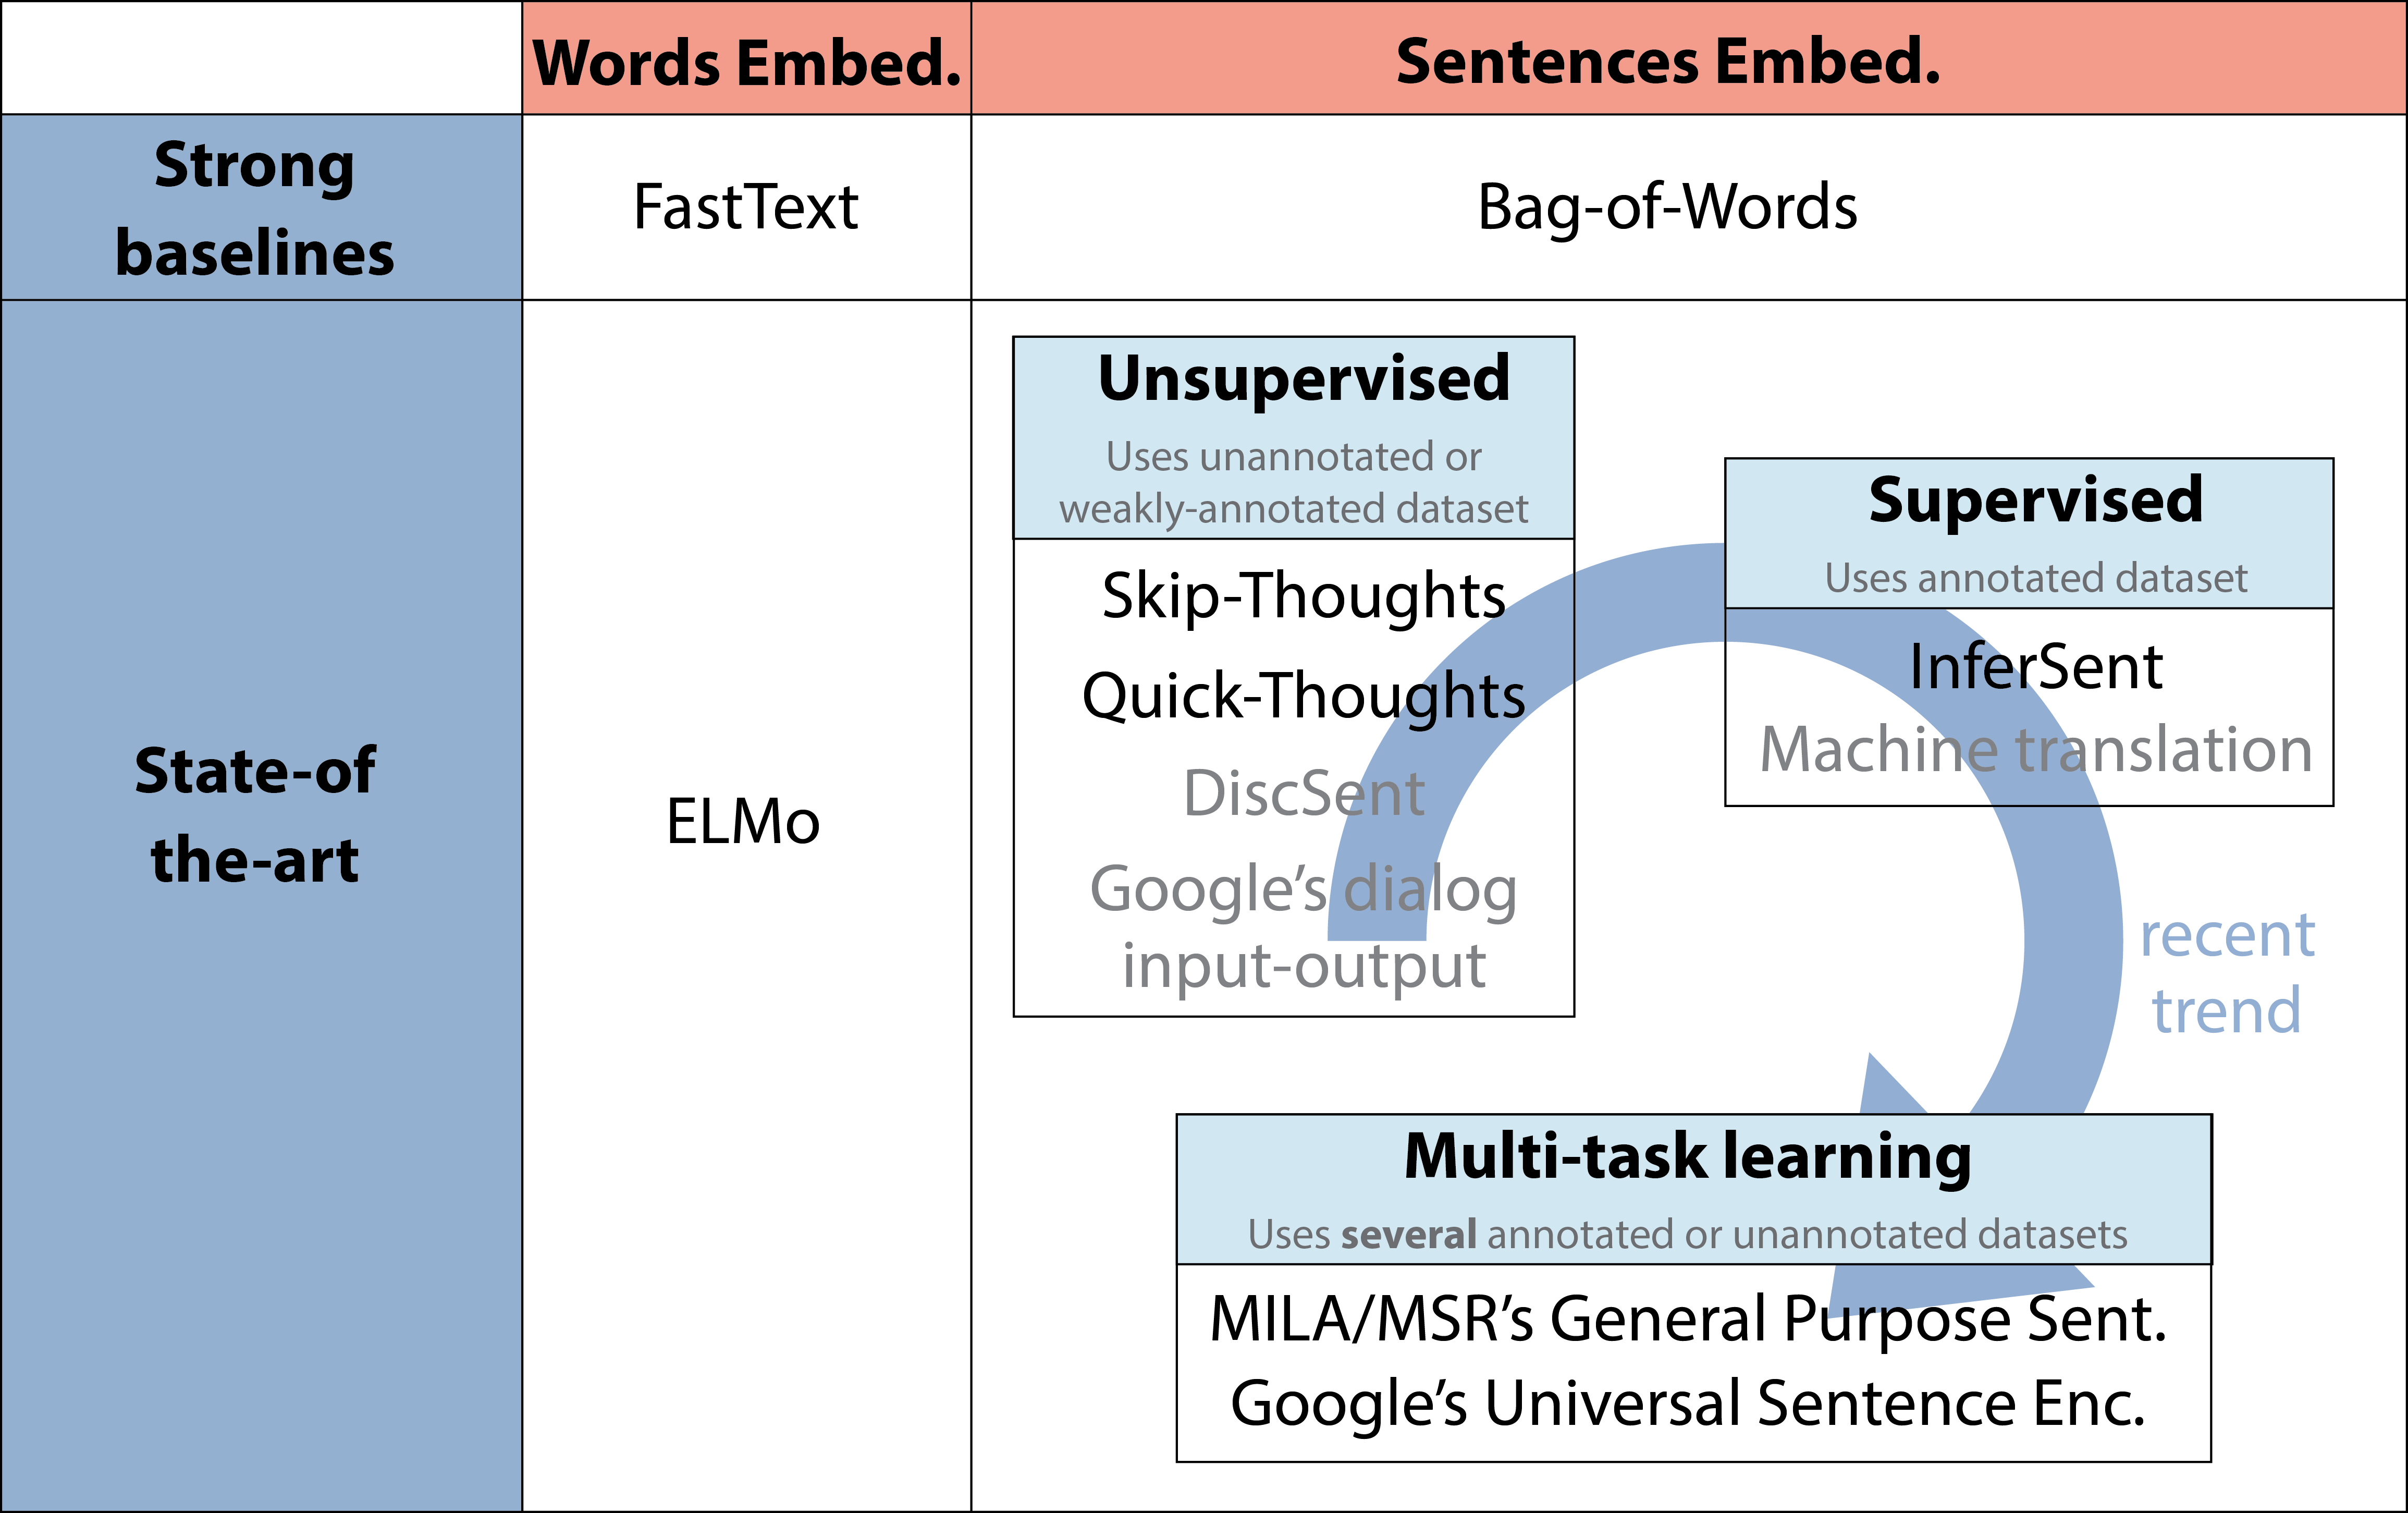 Recent trend in Universal Word/Sentence Embeddings